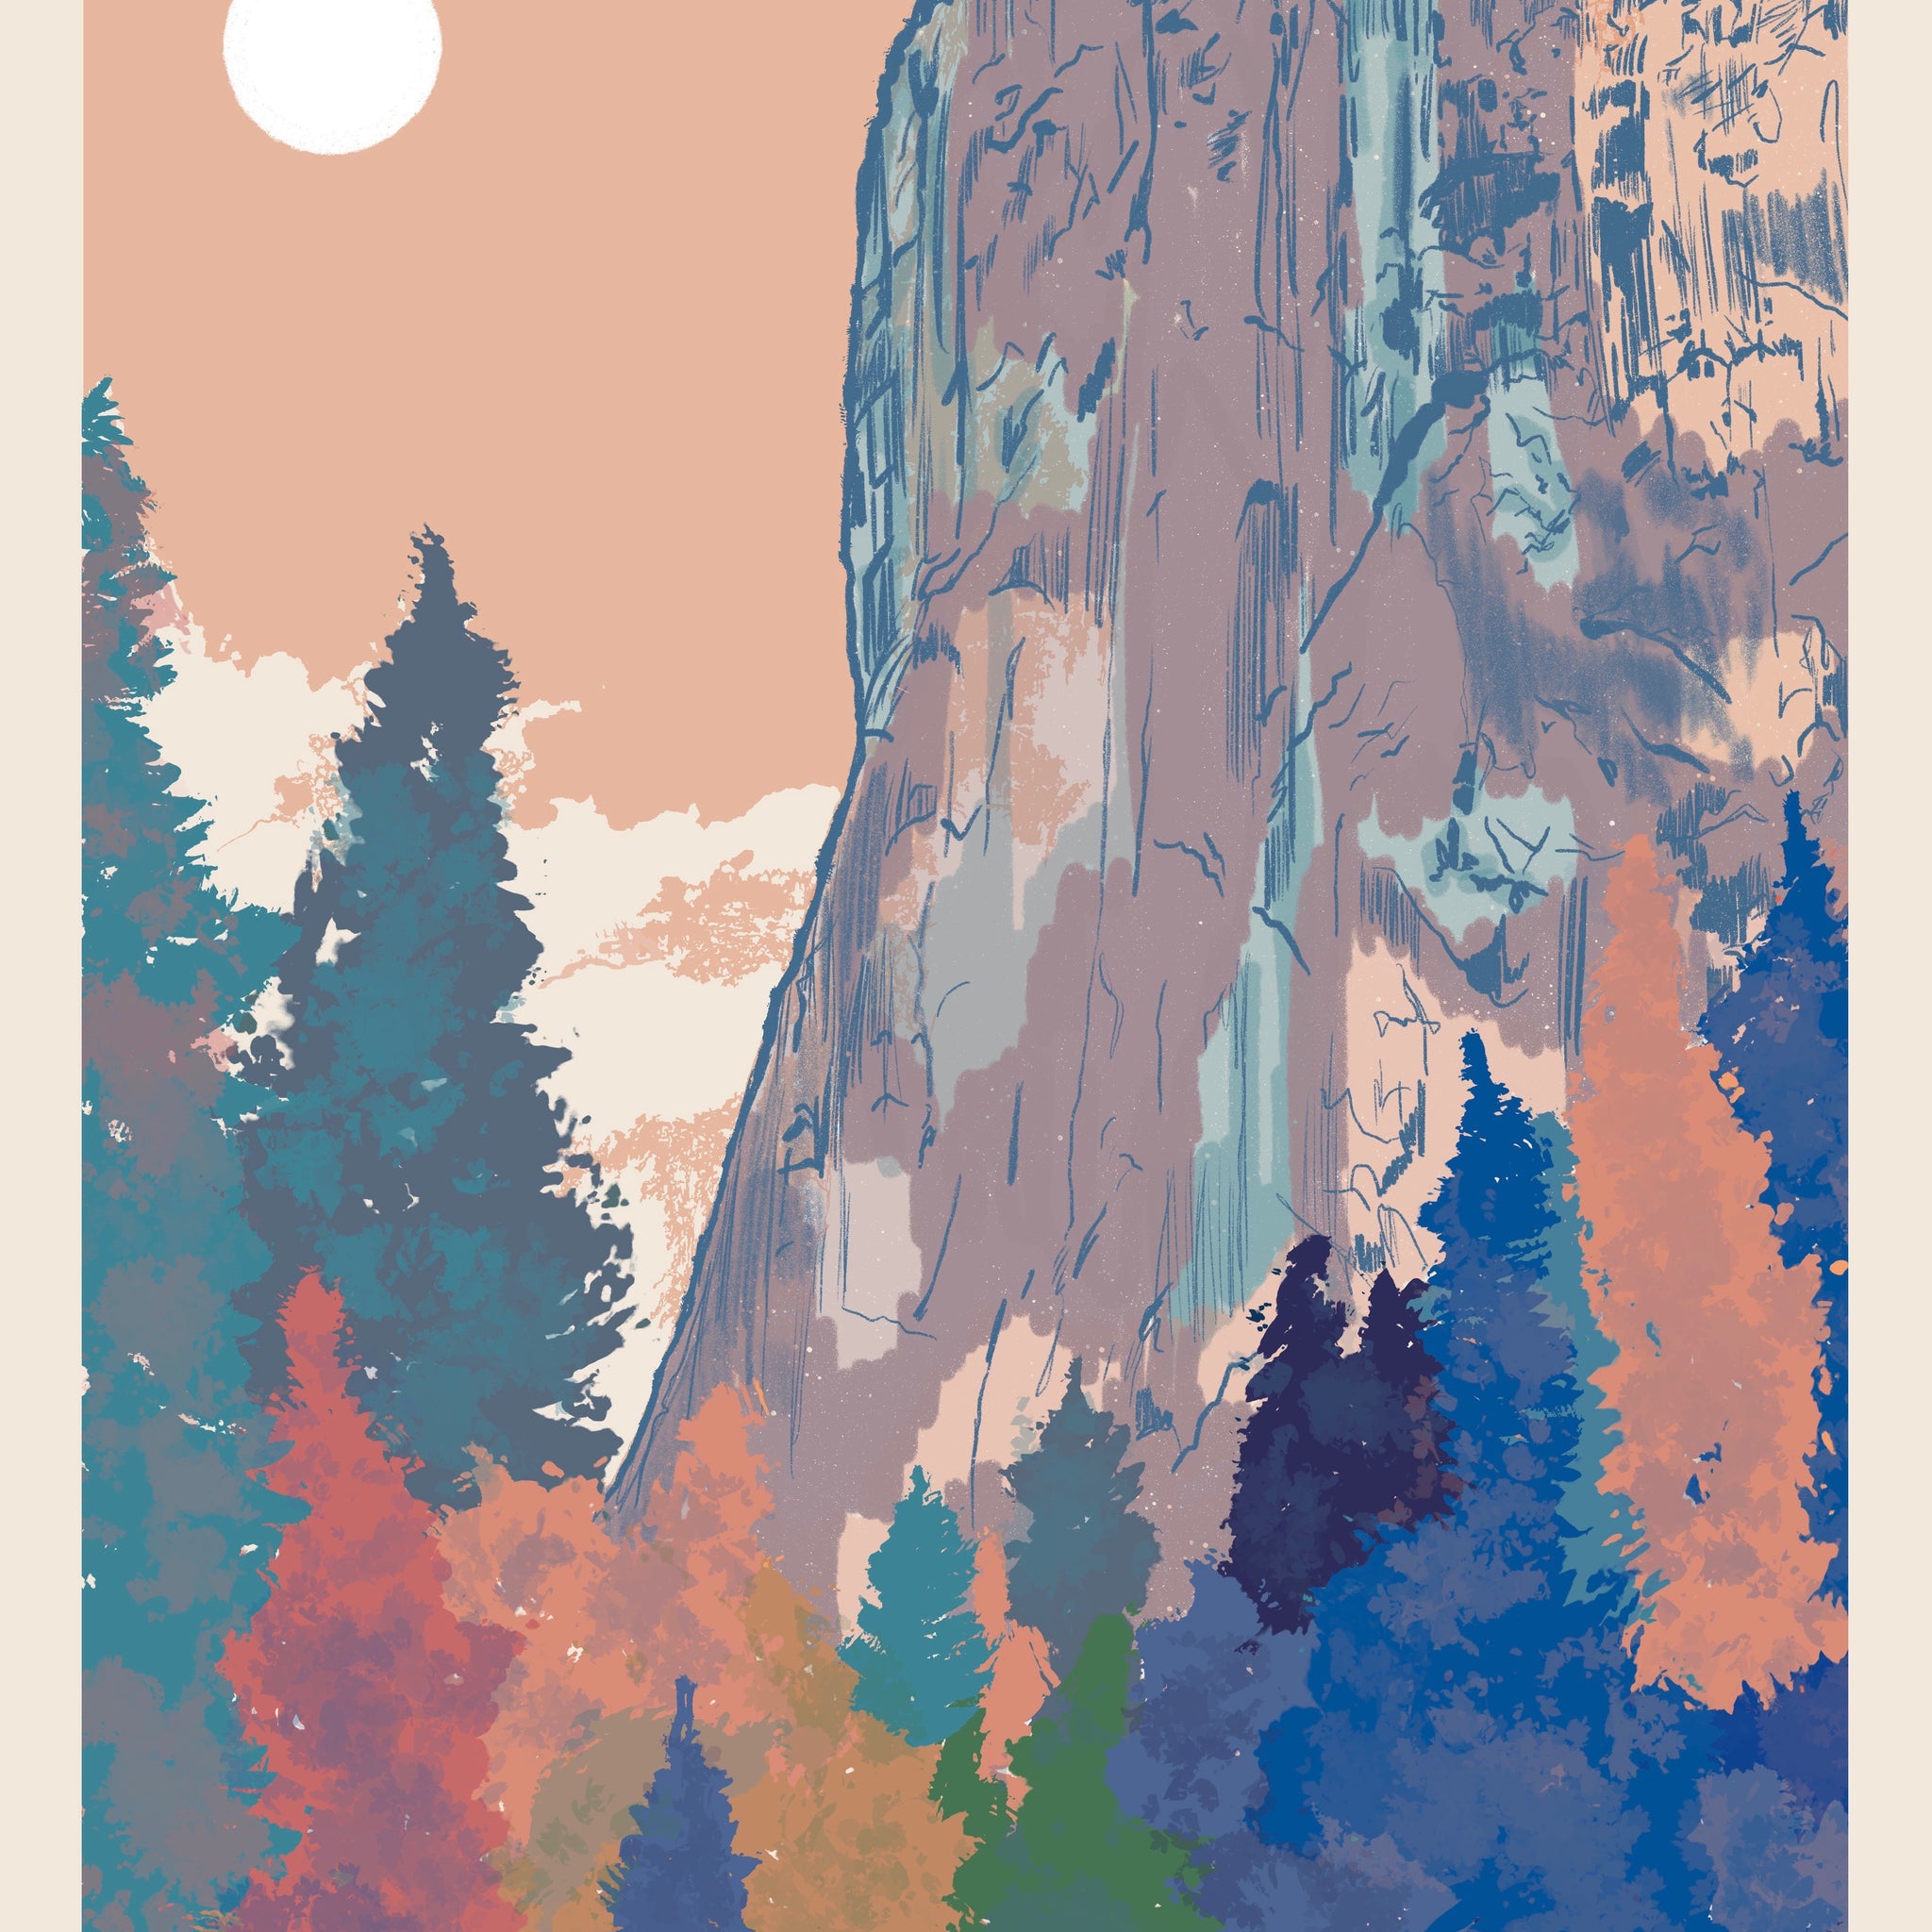 El Capitan (Yosemite)